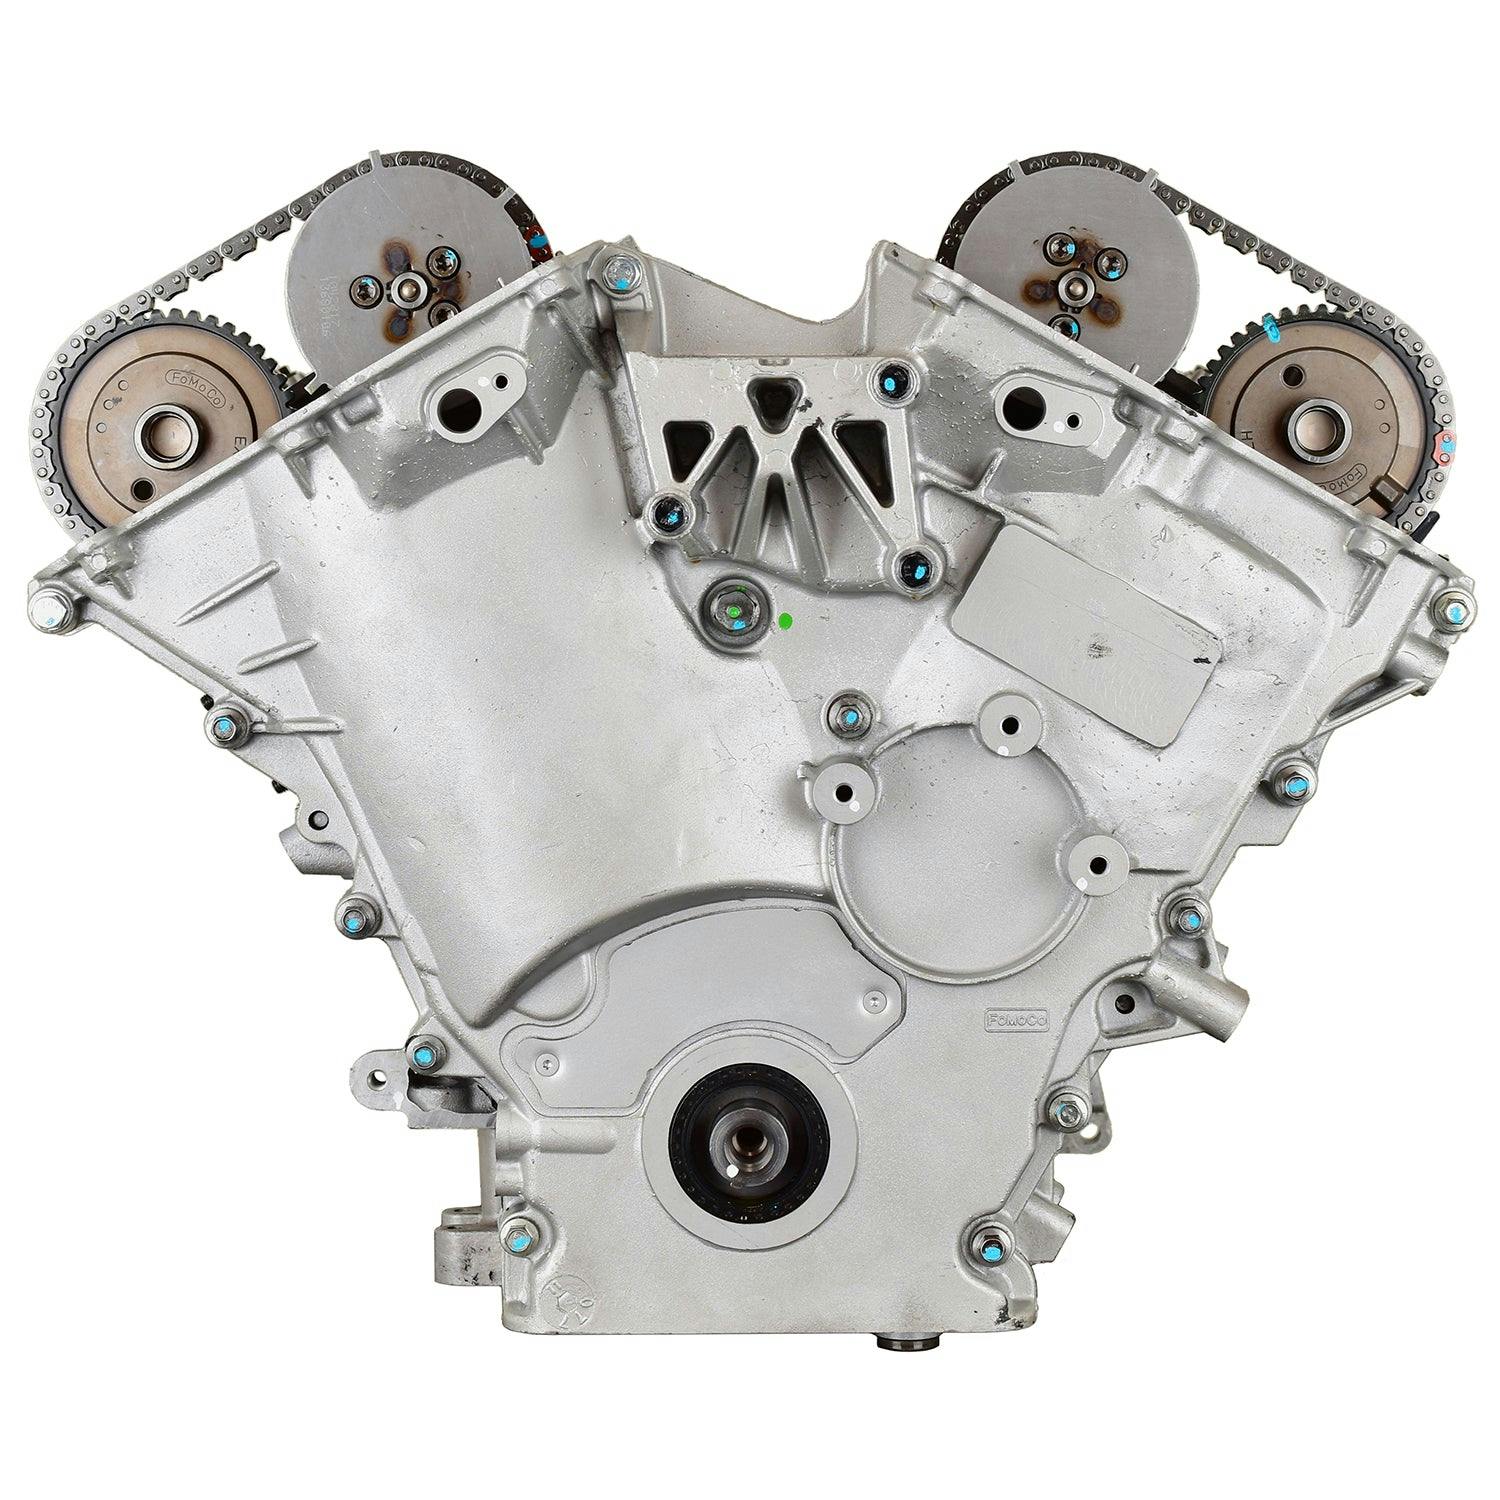 3L V6 Engine for 2009-2012 Ford Escape, Fusion/Mazda Tribute/Mercury Mariner, Milan